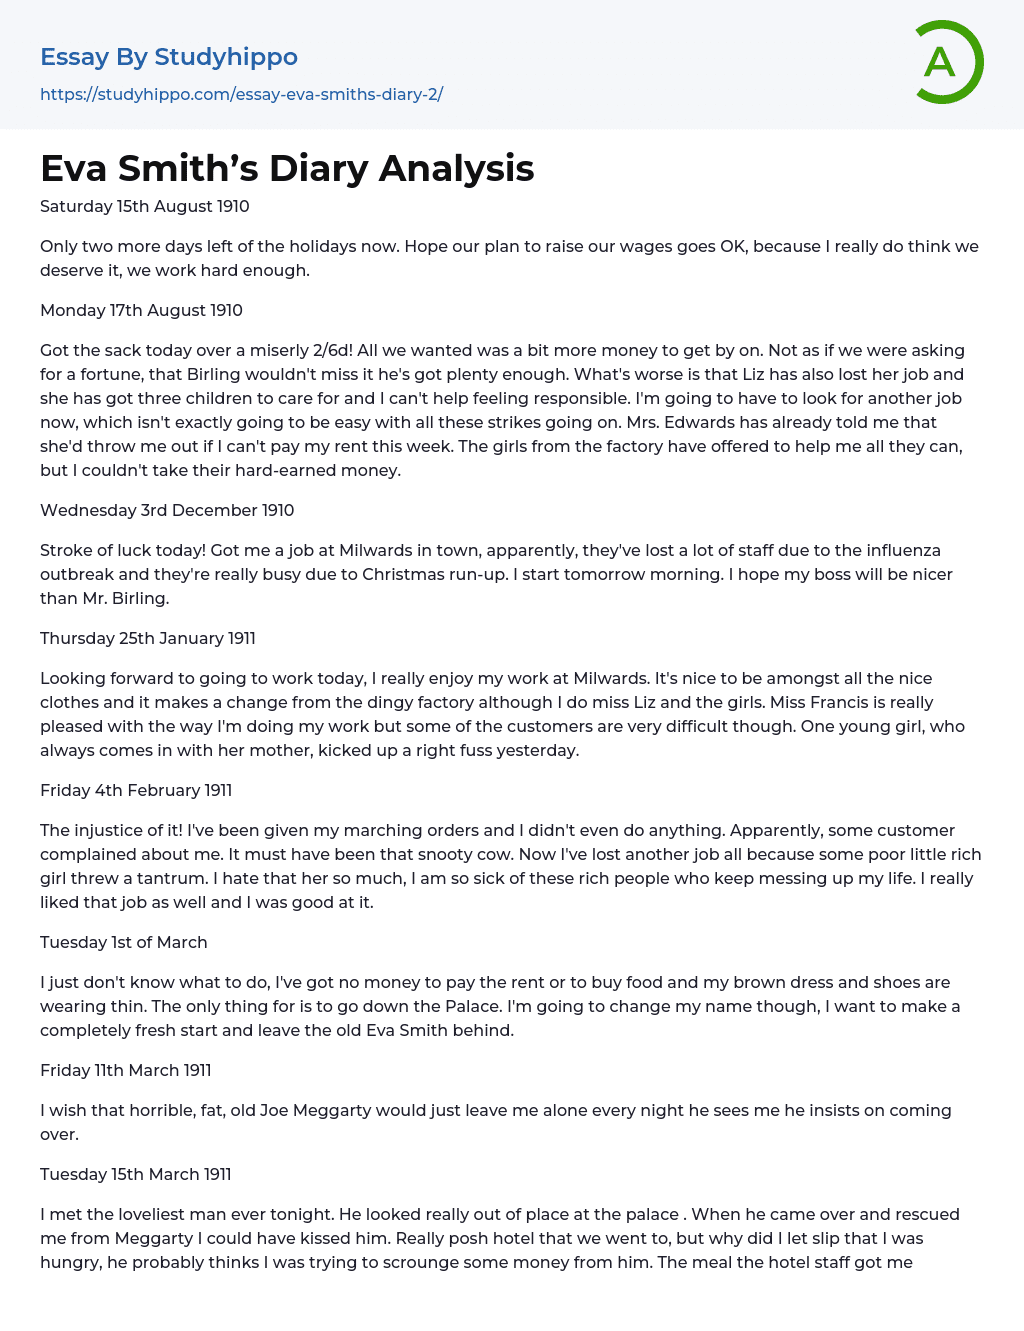 Eva Smith’s Diary Analysis Essay Example